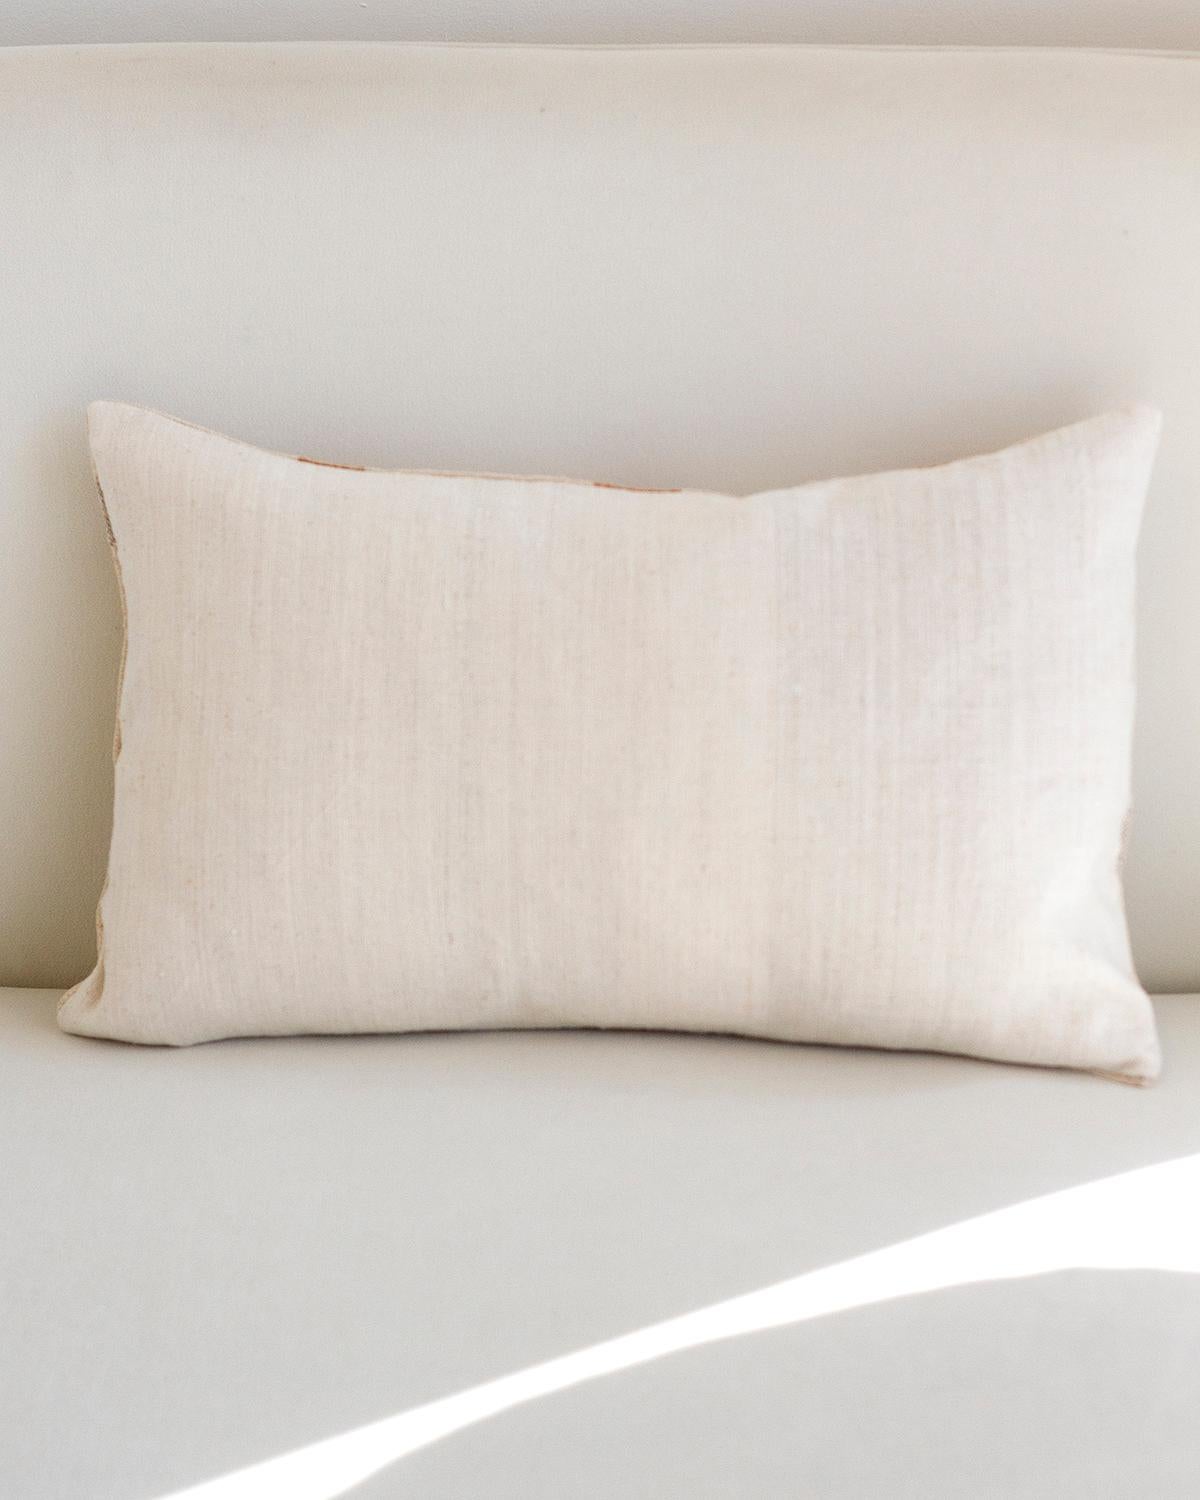 Portuguese Matilde Mustard Checkered Lumbar Throw Pillow made from Vintage Linen